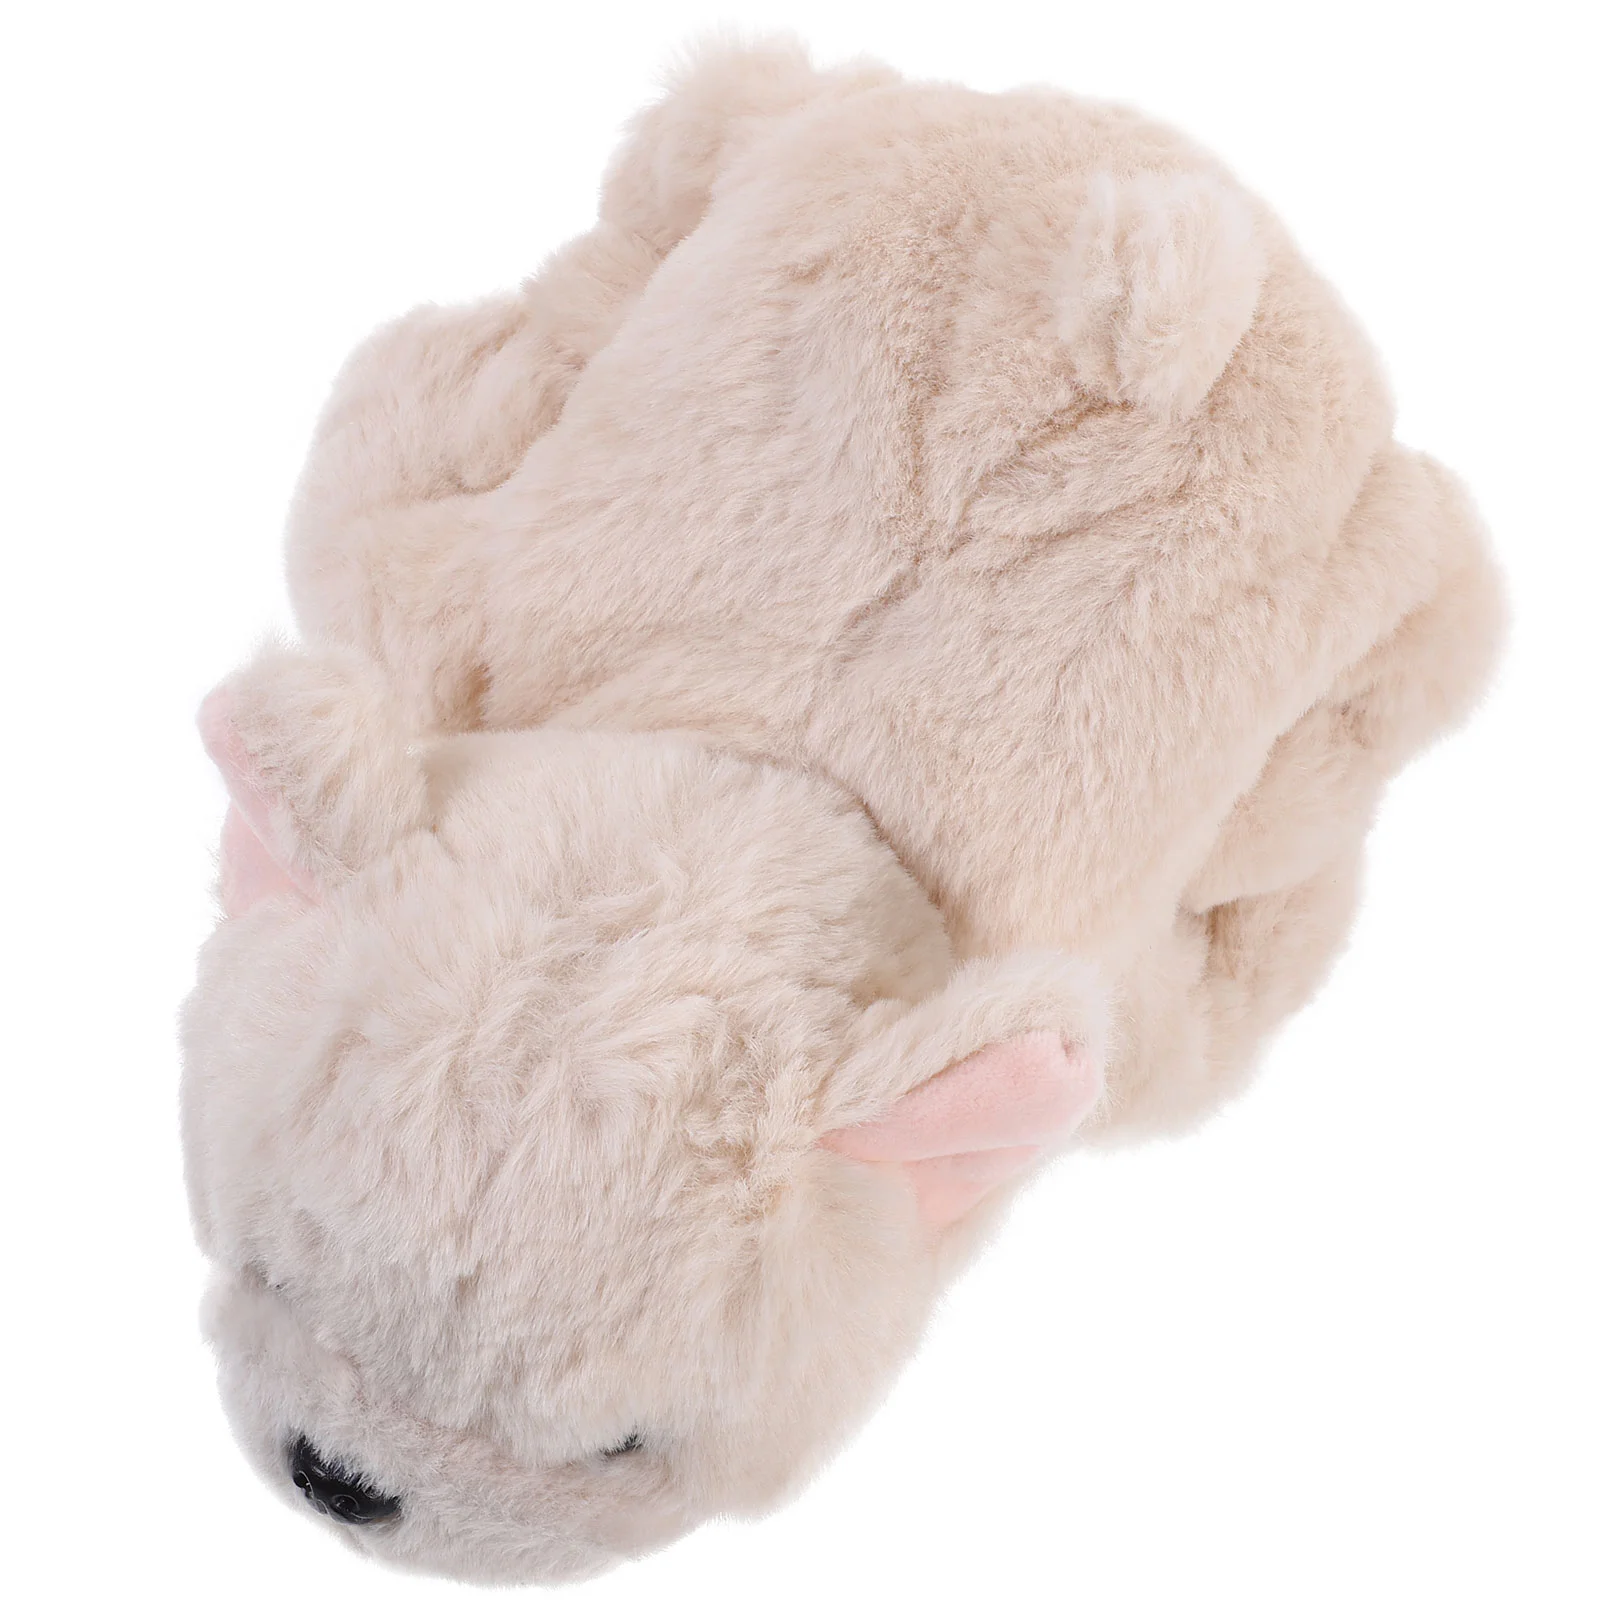 цена Stuffed Animal Hugger Slap Bracelet Stuffed Animal Toy Party Gift Party Decor